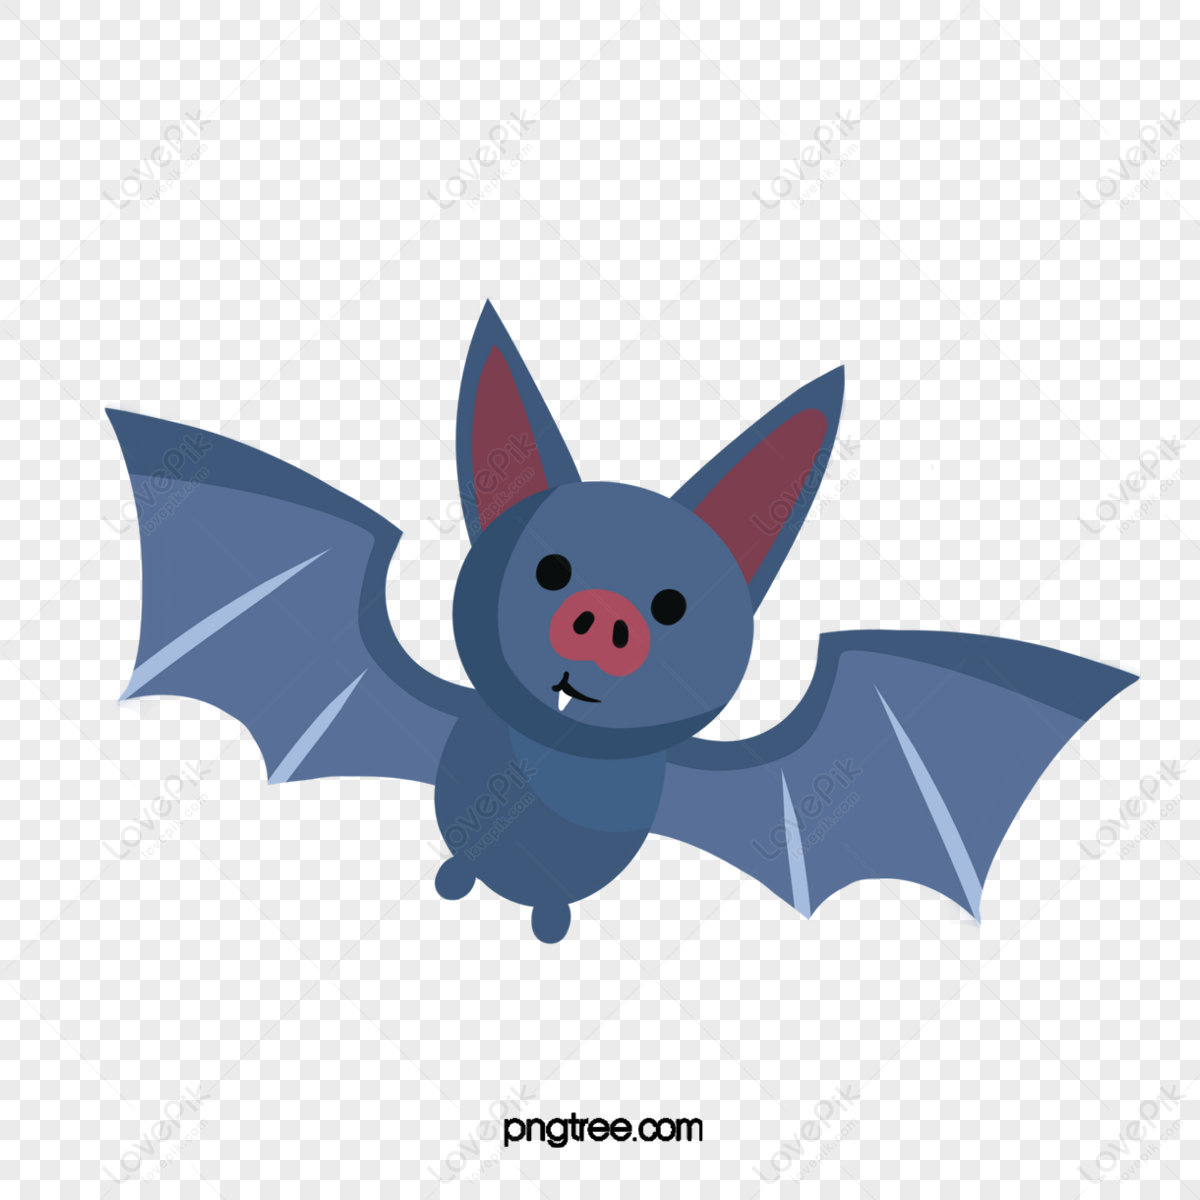 Blue Bats Images, HD Pictures For Free Vectors Download - Lovepik.com